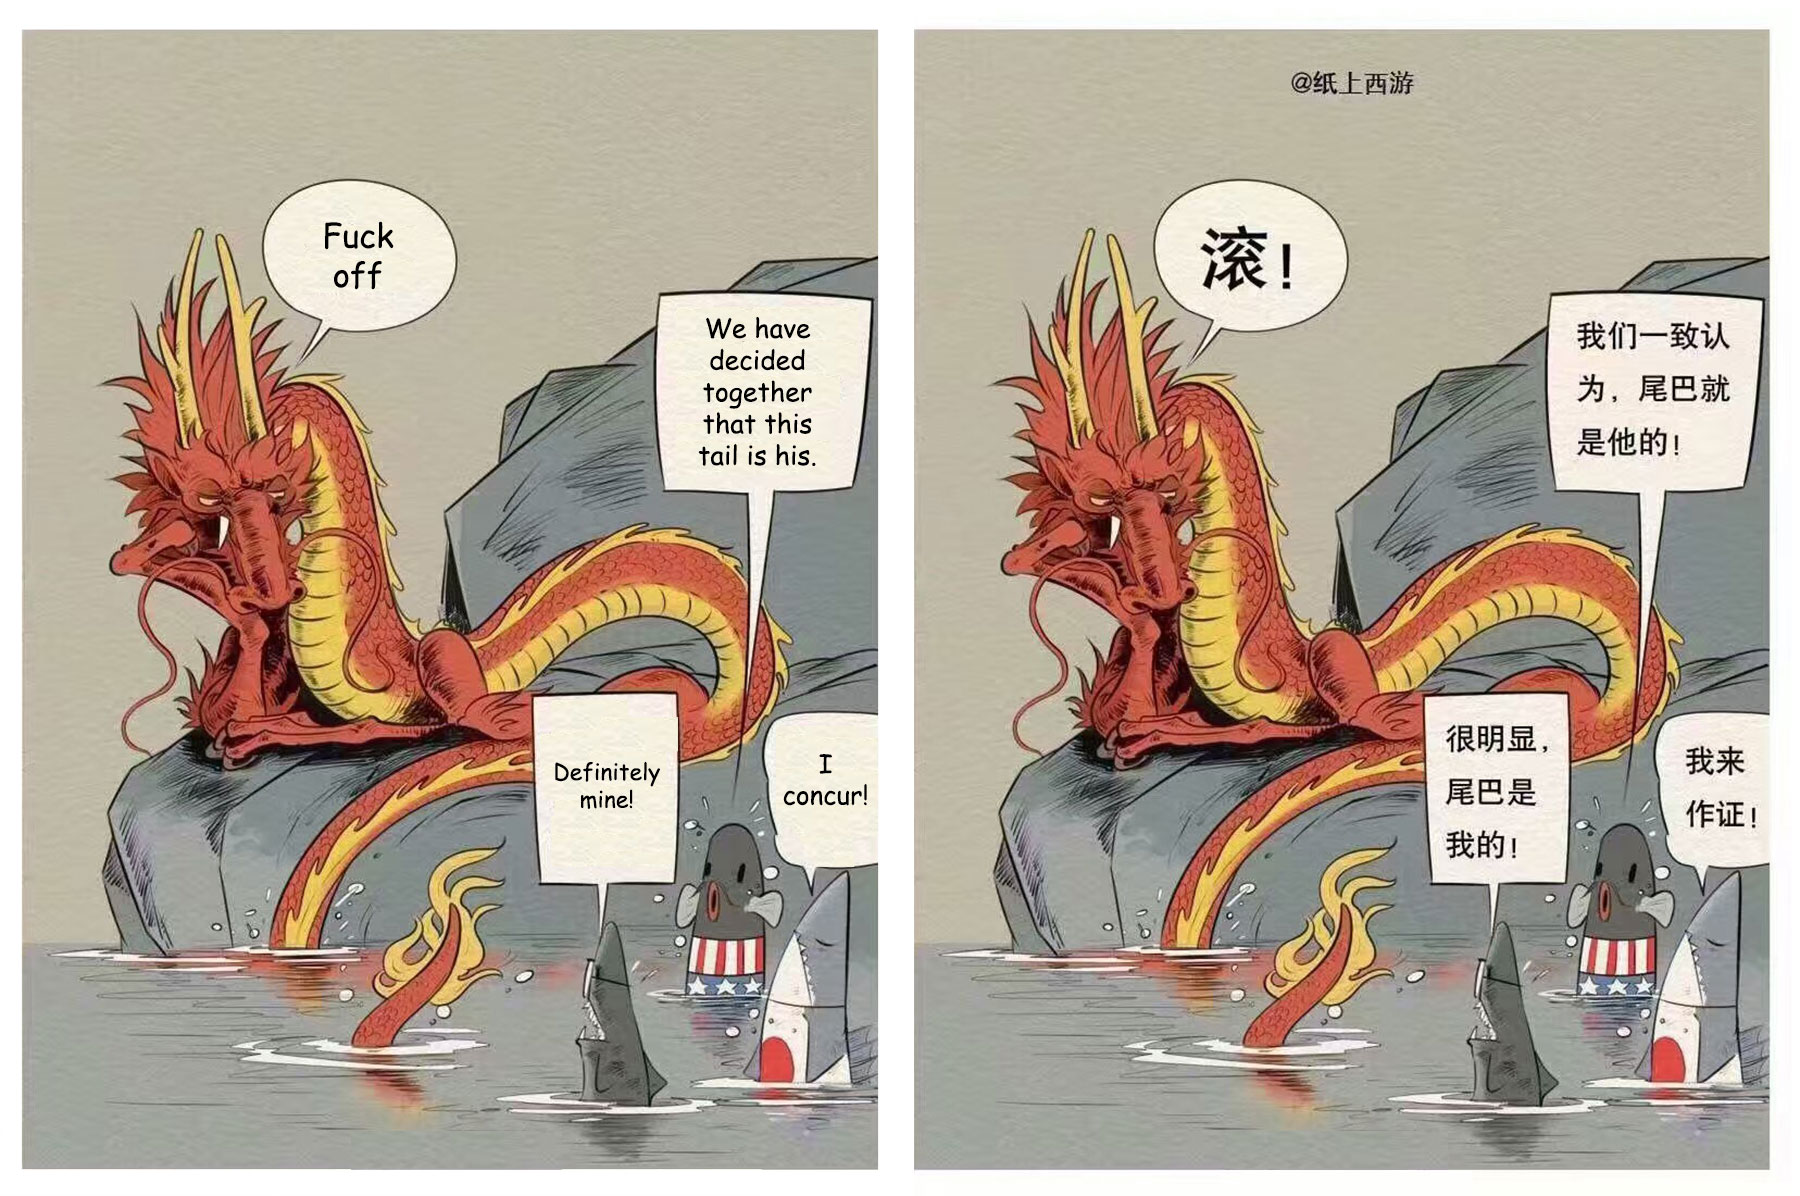 Chinese comic on South China Sea